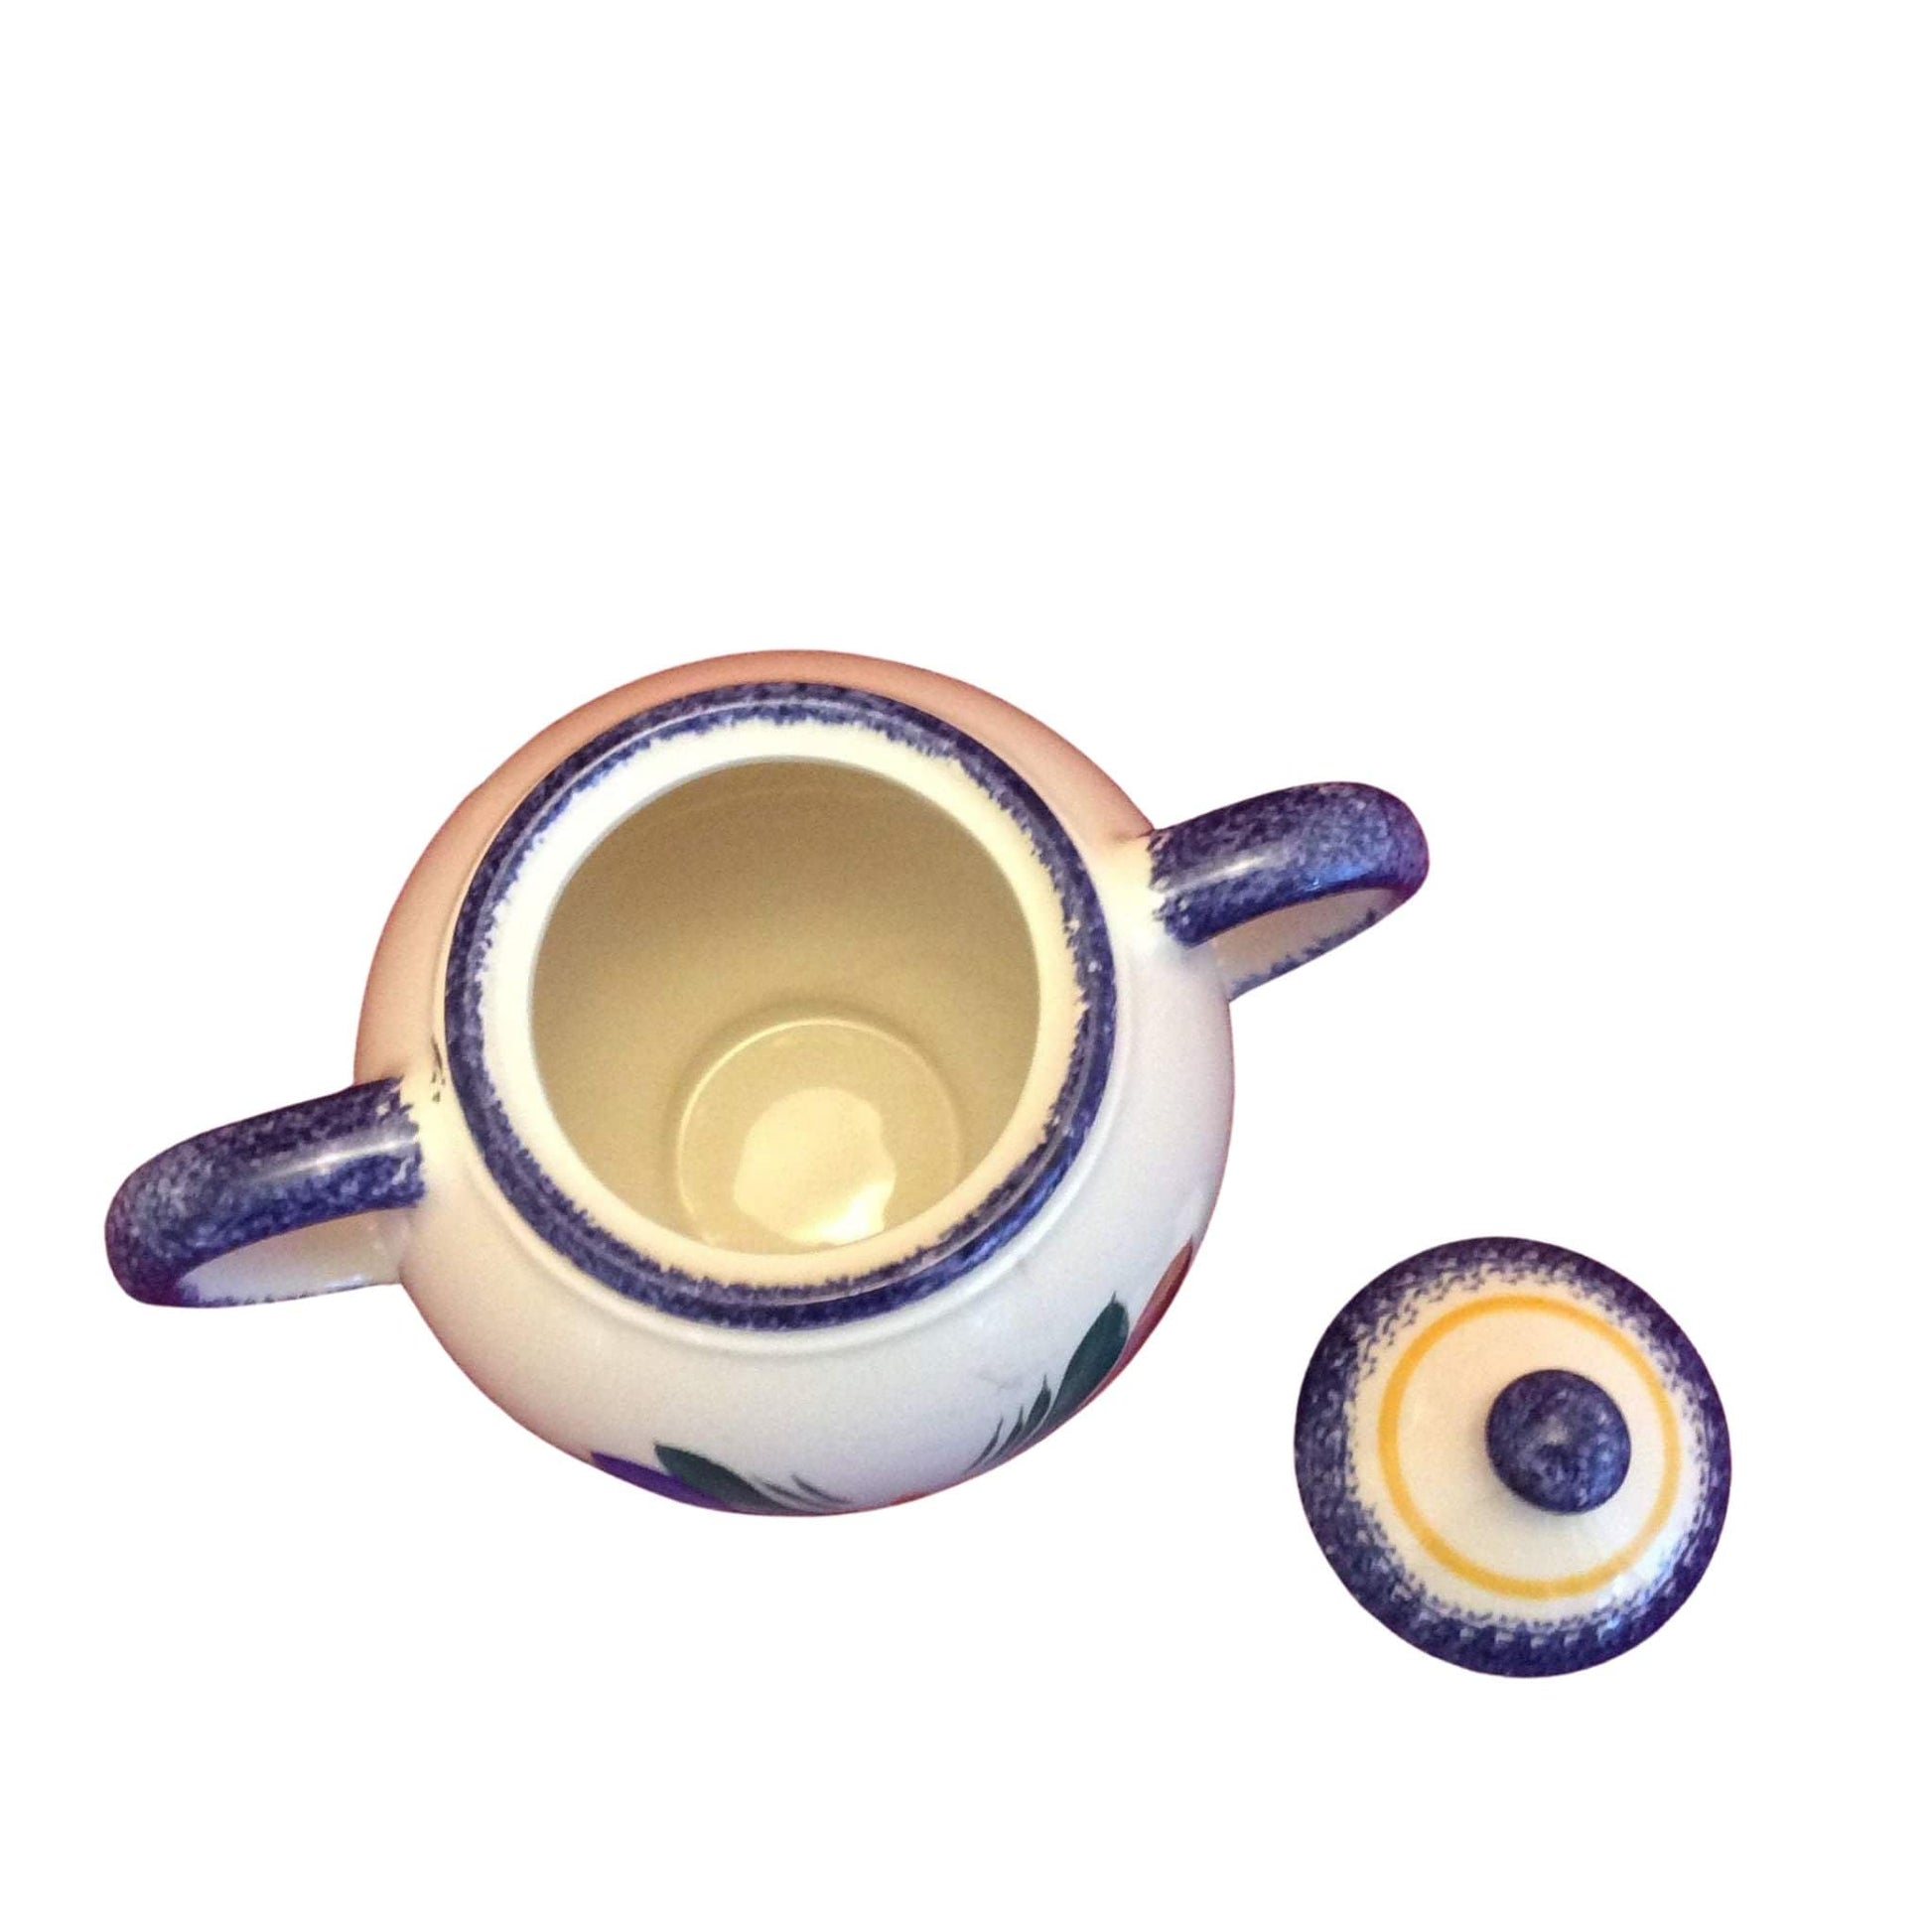 Quimper Sugar Bowl Multi / Pottery / Cottagecore